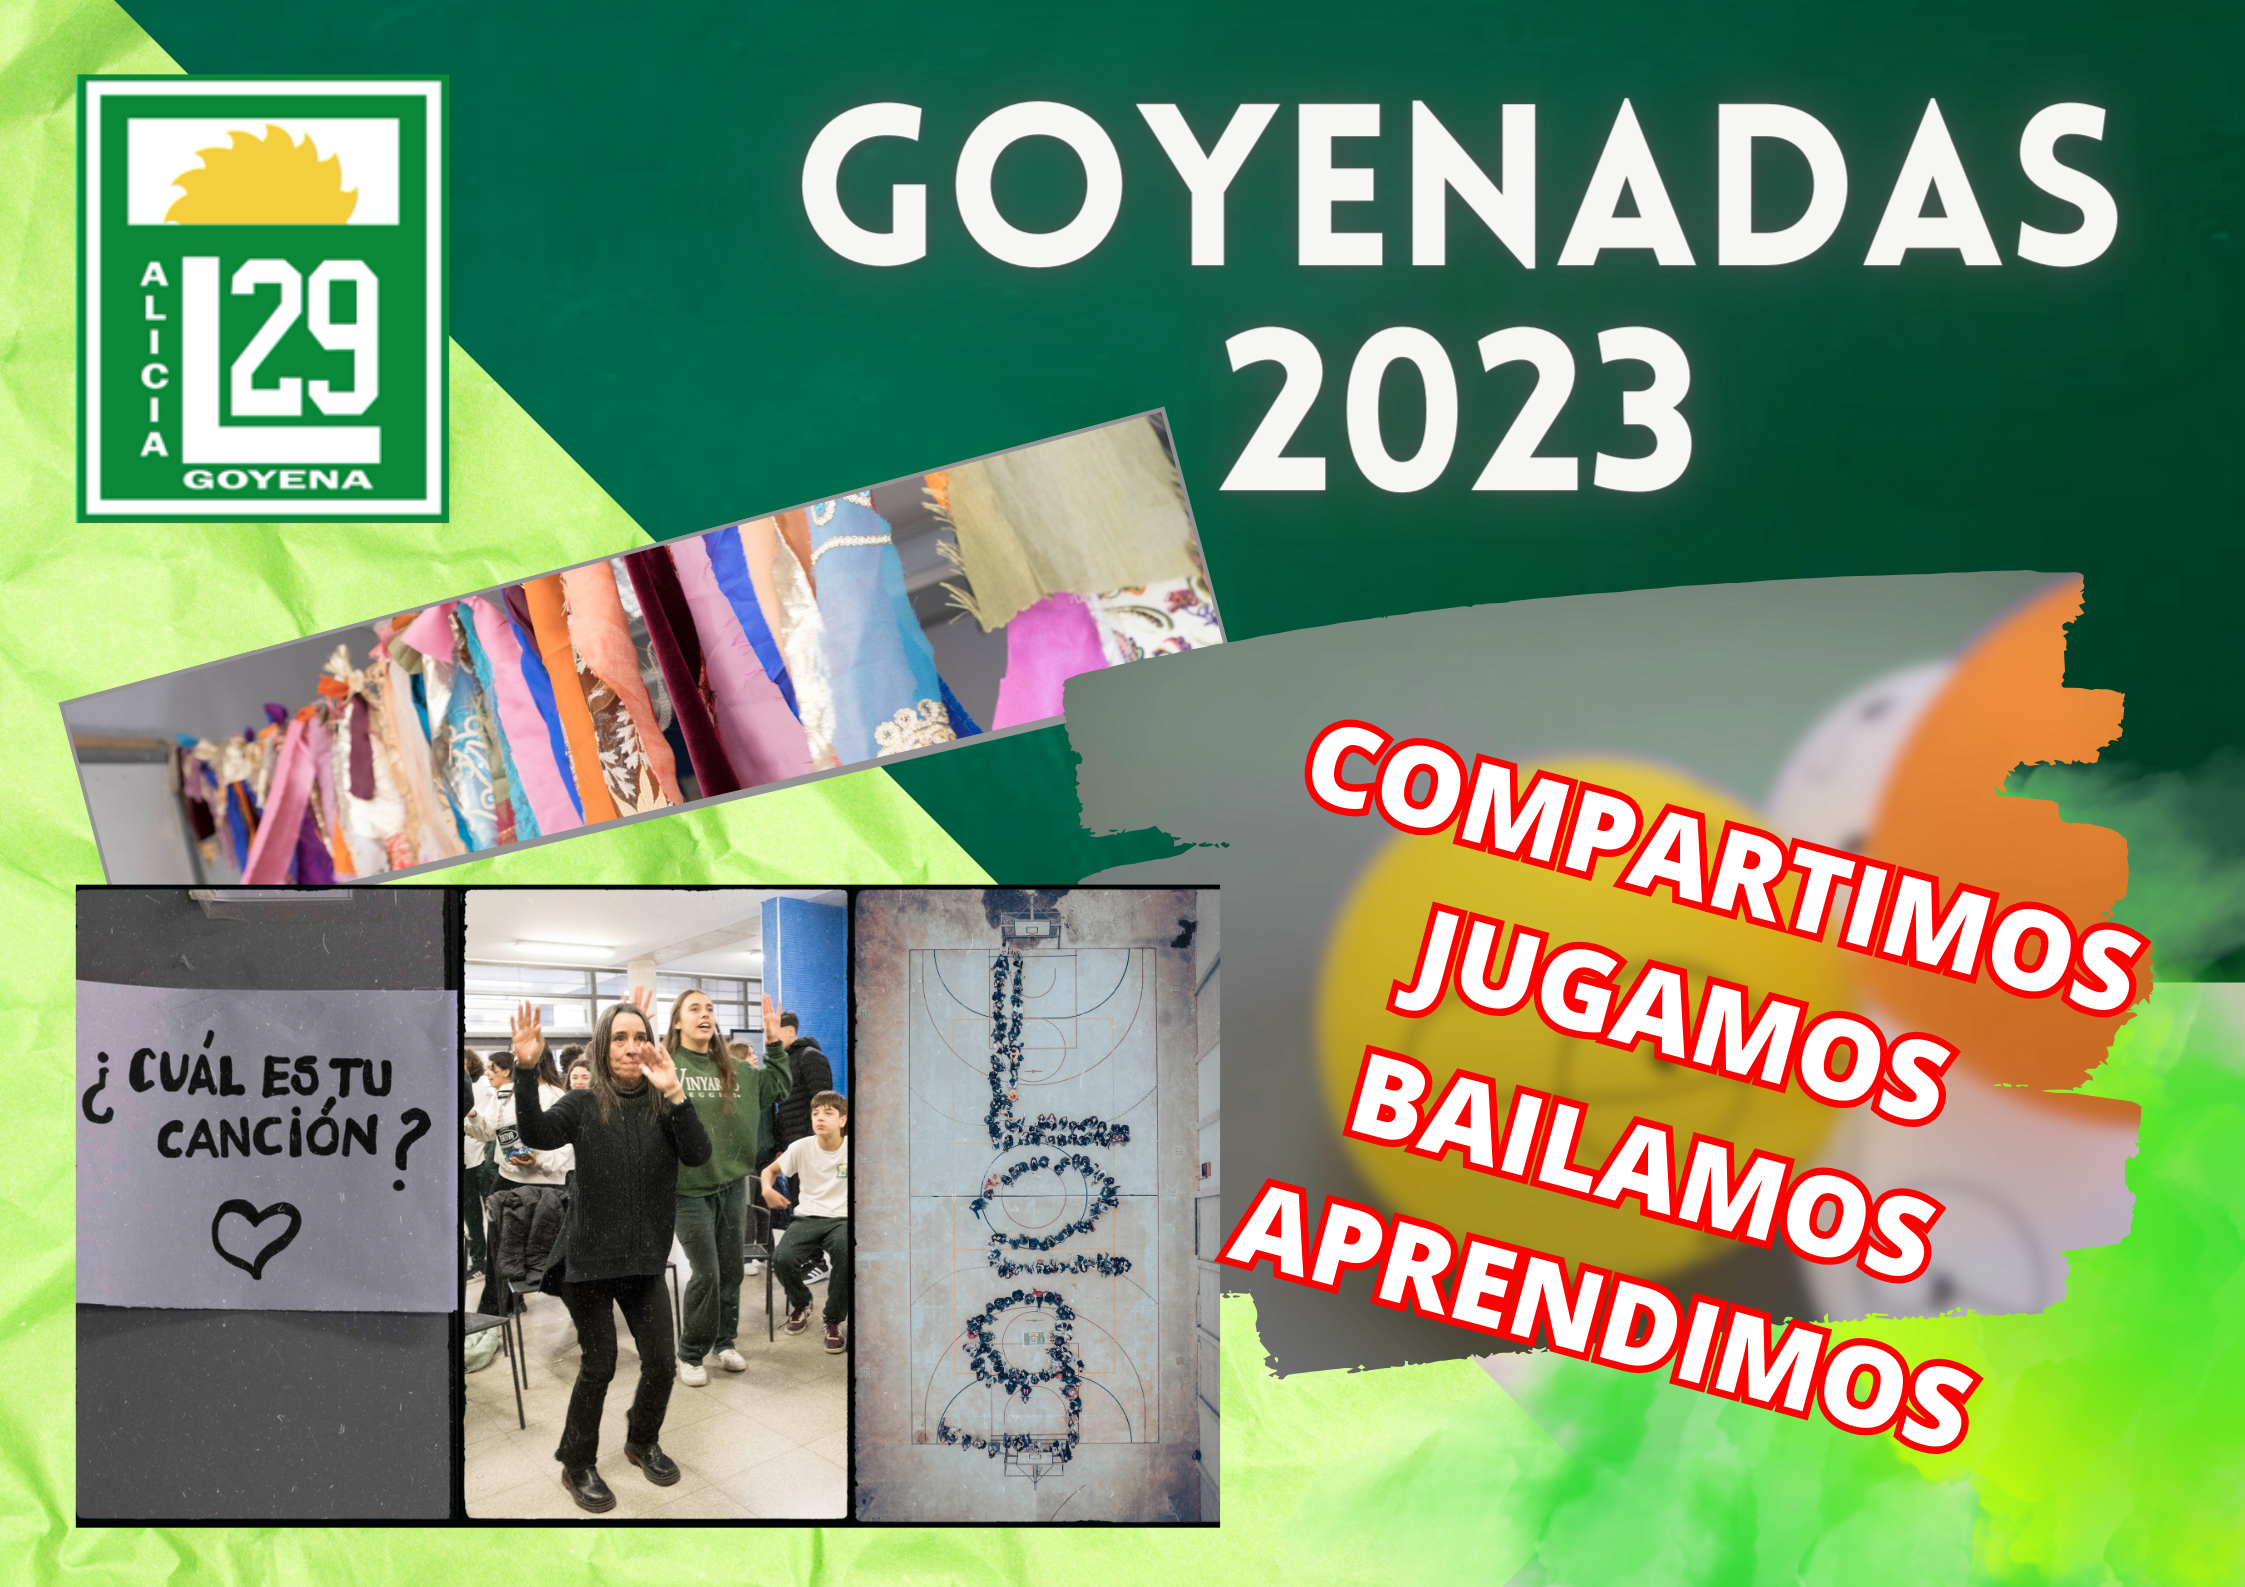 GOYENADAS 2023